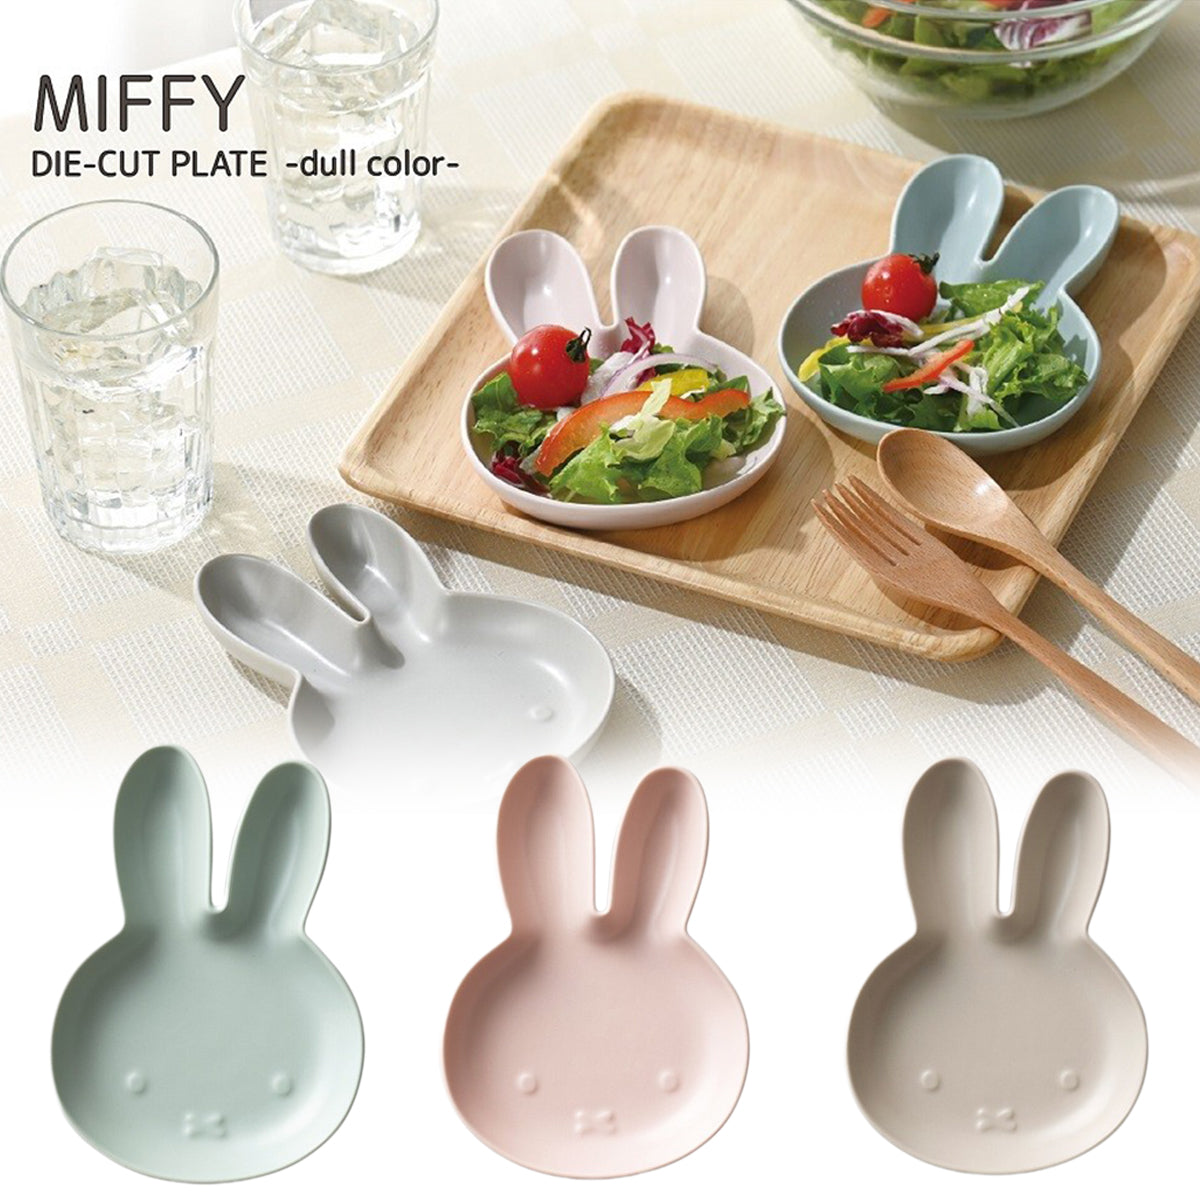 Miffy die-cut plate S (Japan Edition)